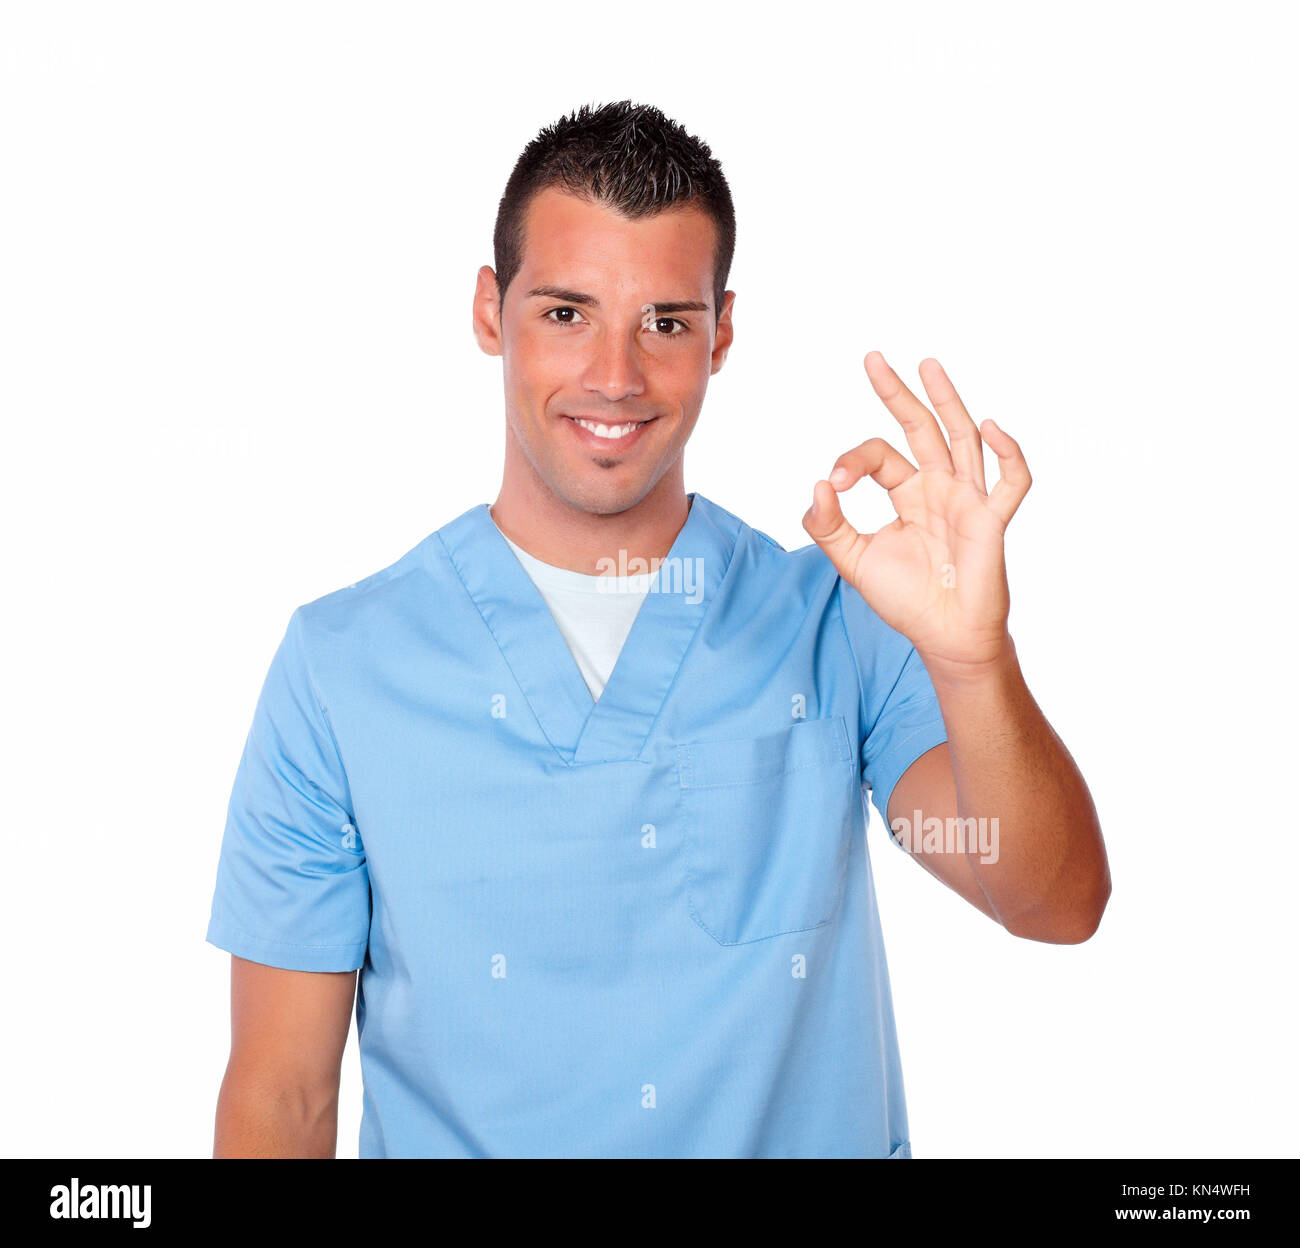 https://c8.alamy.com/comp/KN4WFH/portrait-of-handsome-latin-nurse-on-blue-medical-uniform-with-ok-sign-KN4WFH.jpg